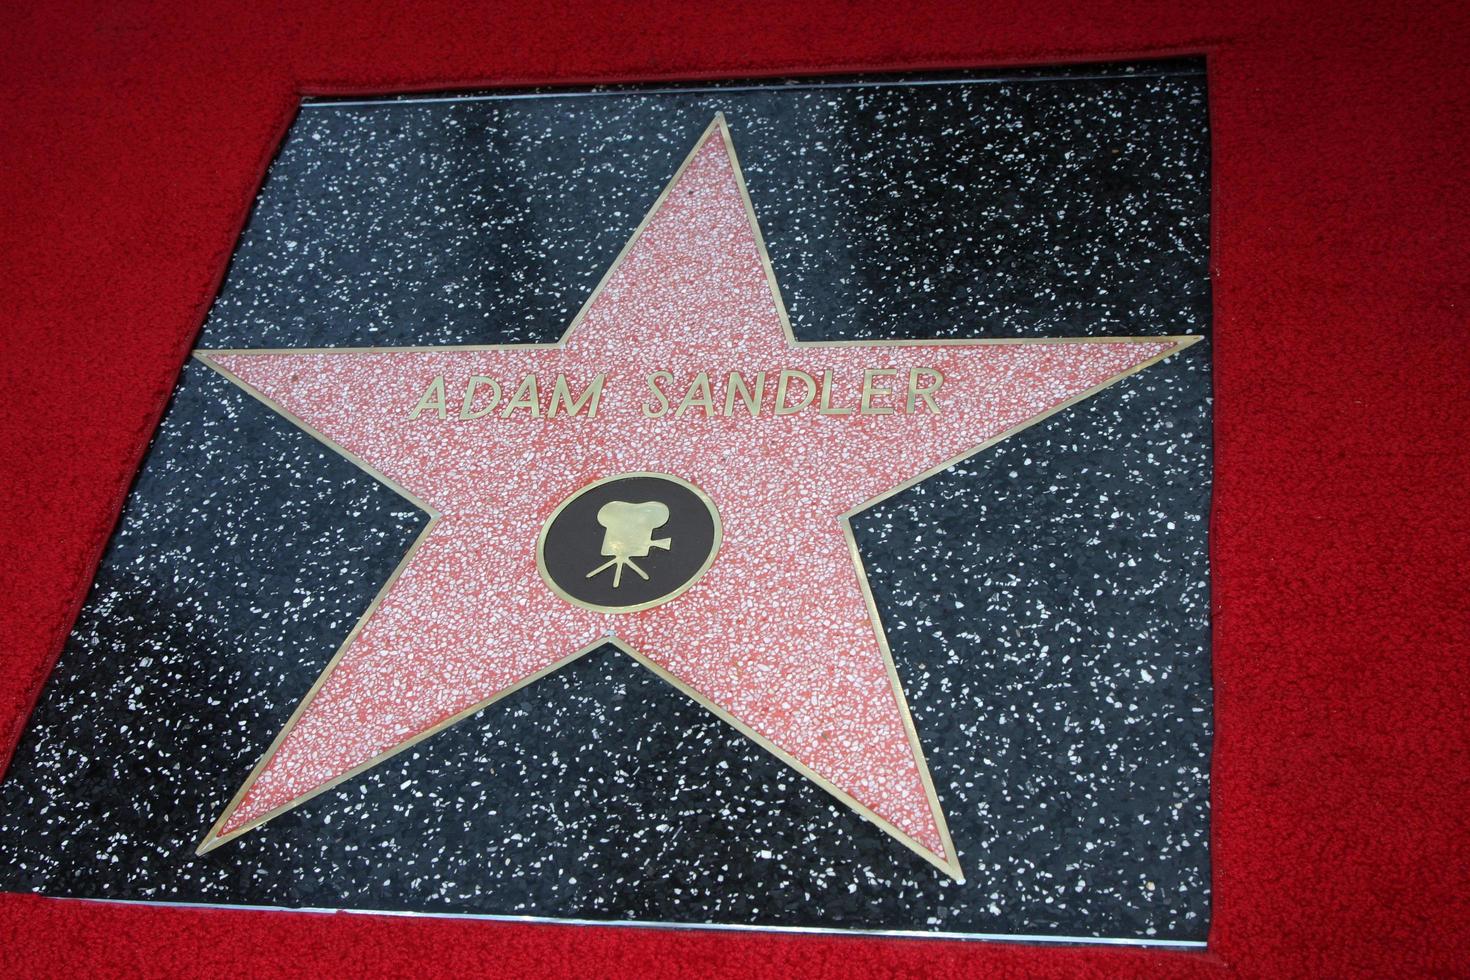 Los angeles - 1 fév - adam sandler star à l'adam sandler hollywood walk of fame star cérémonie à l'hôtel w le 1 février 2011 à hollywood, ca photo